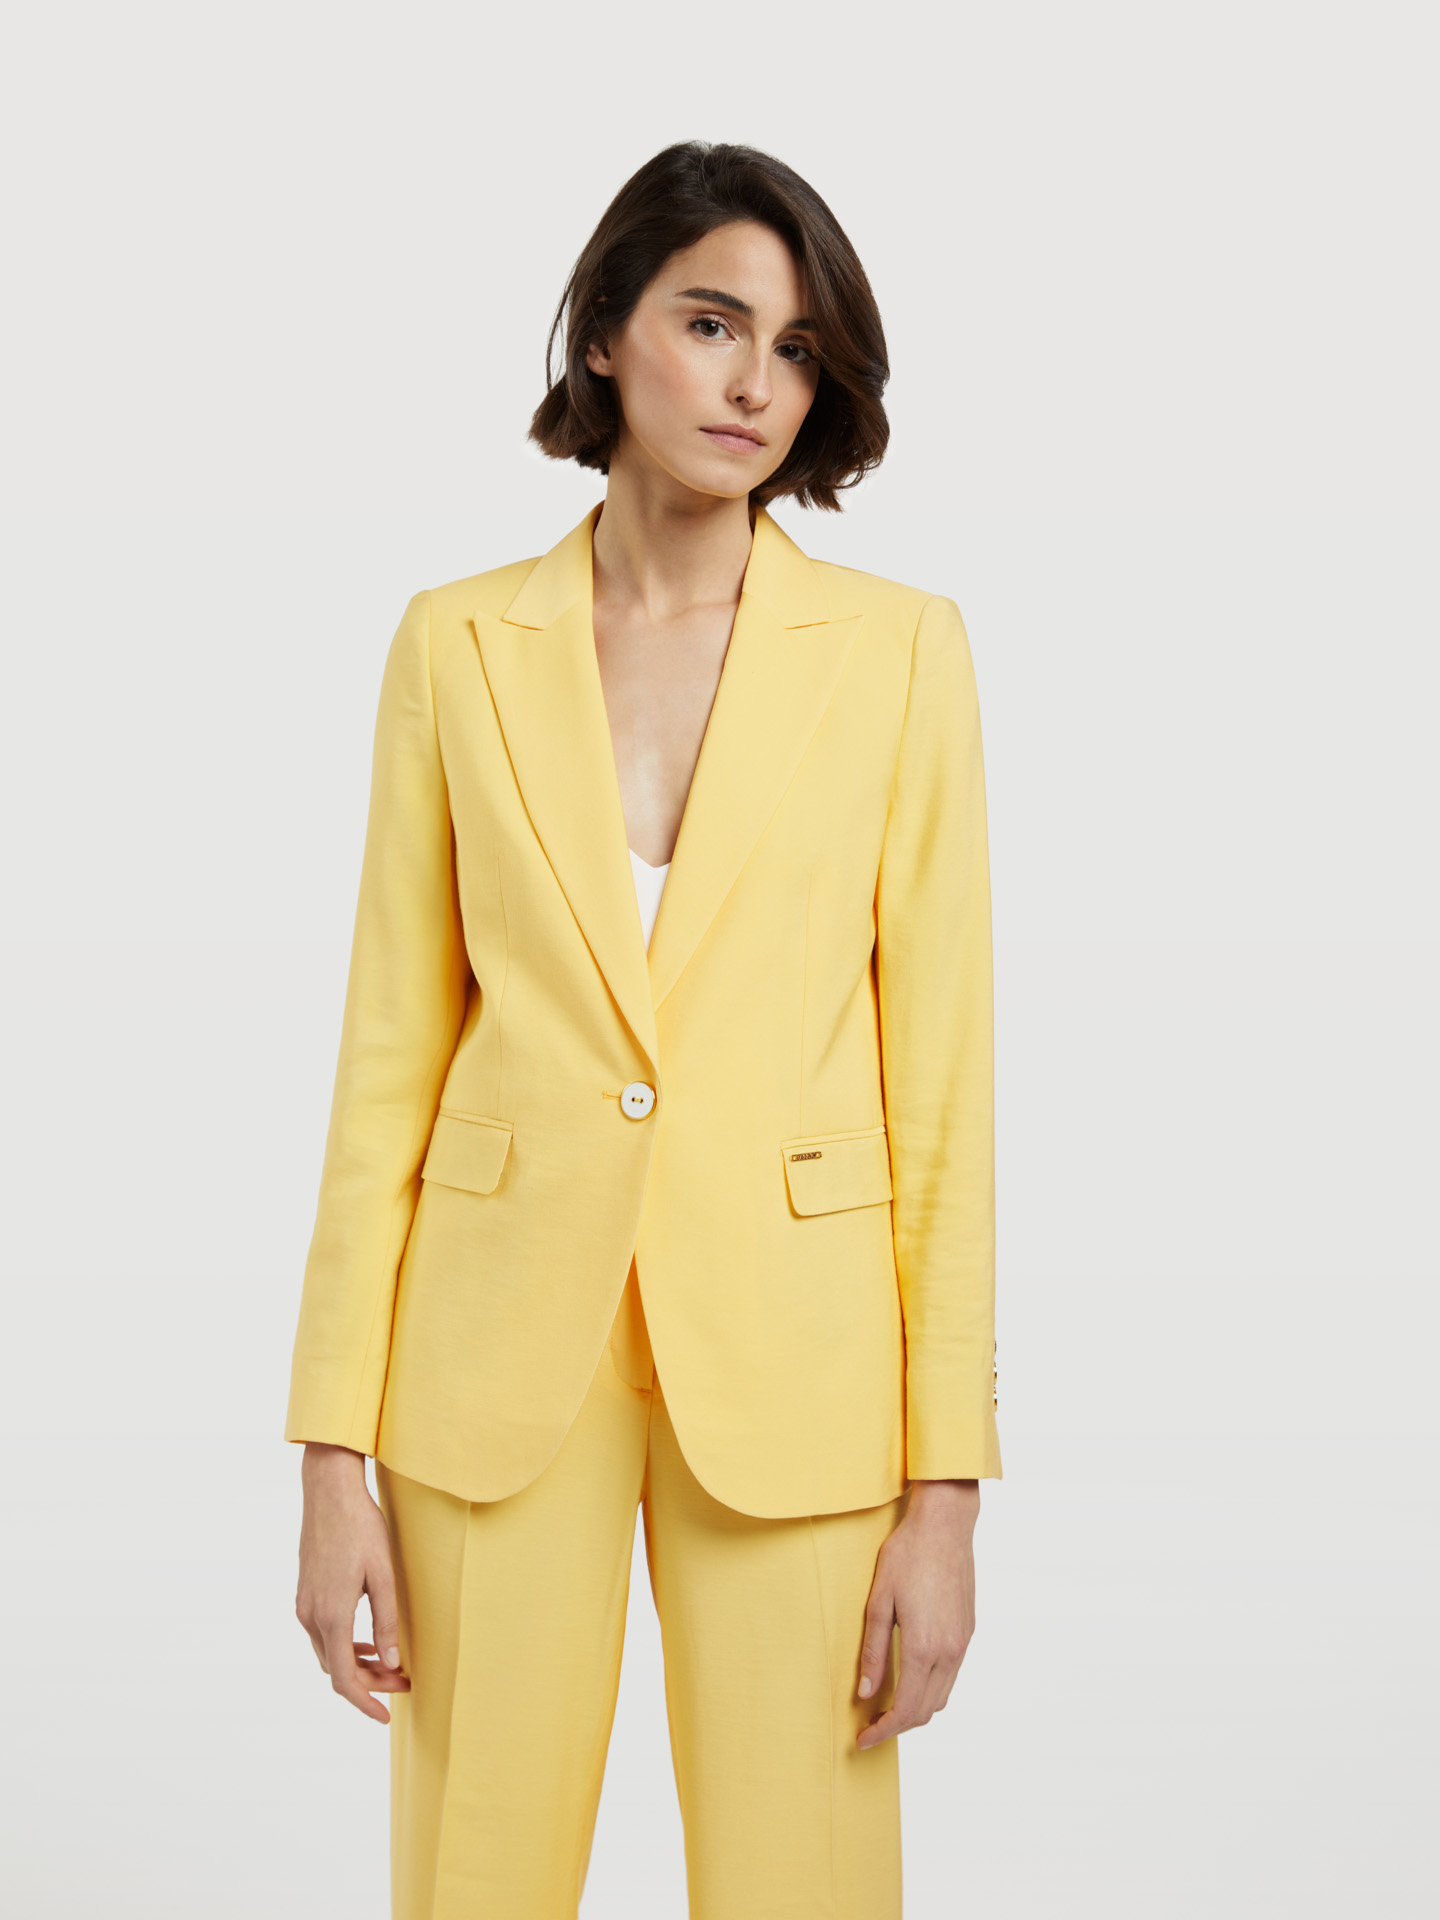 Suit Blazer Yellow Classic Woman